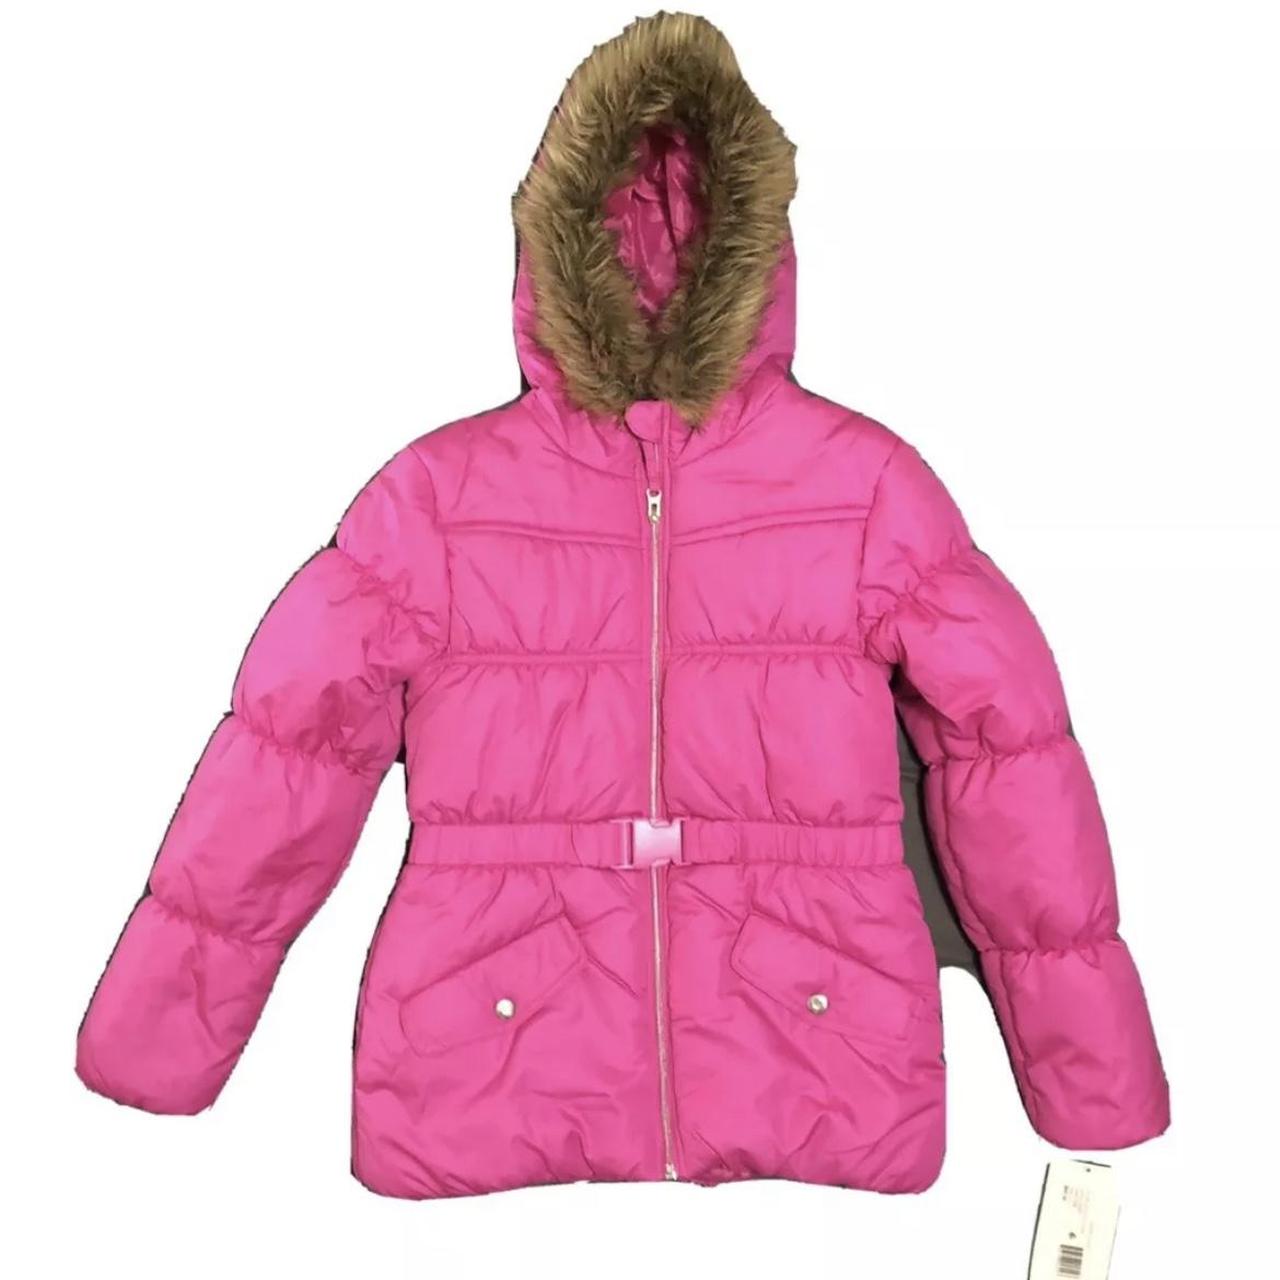 Macy's Pink Jacket | Depop